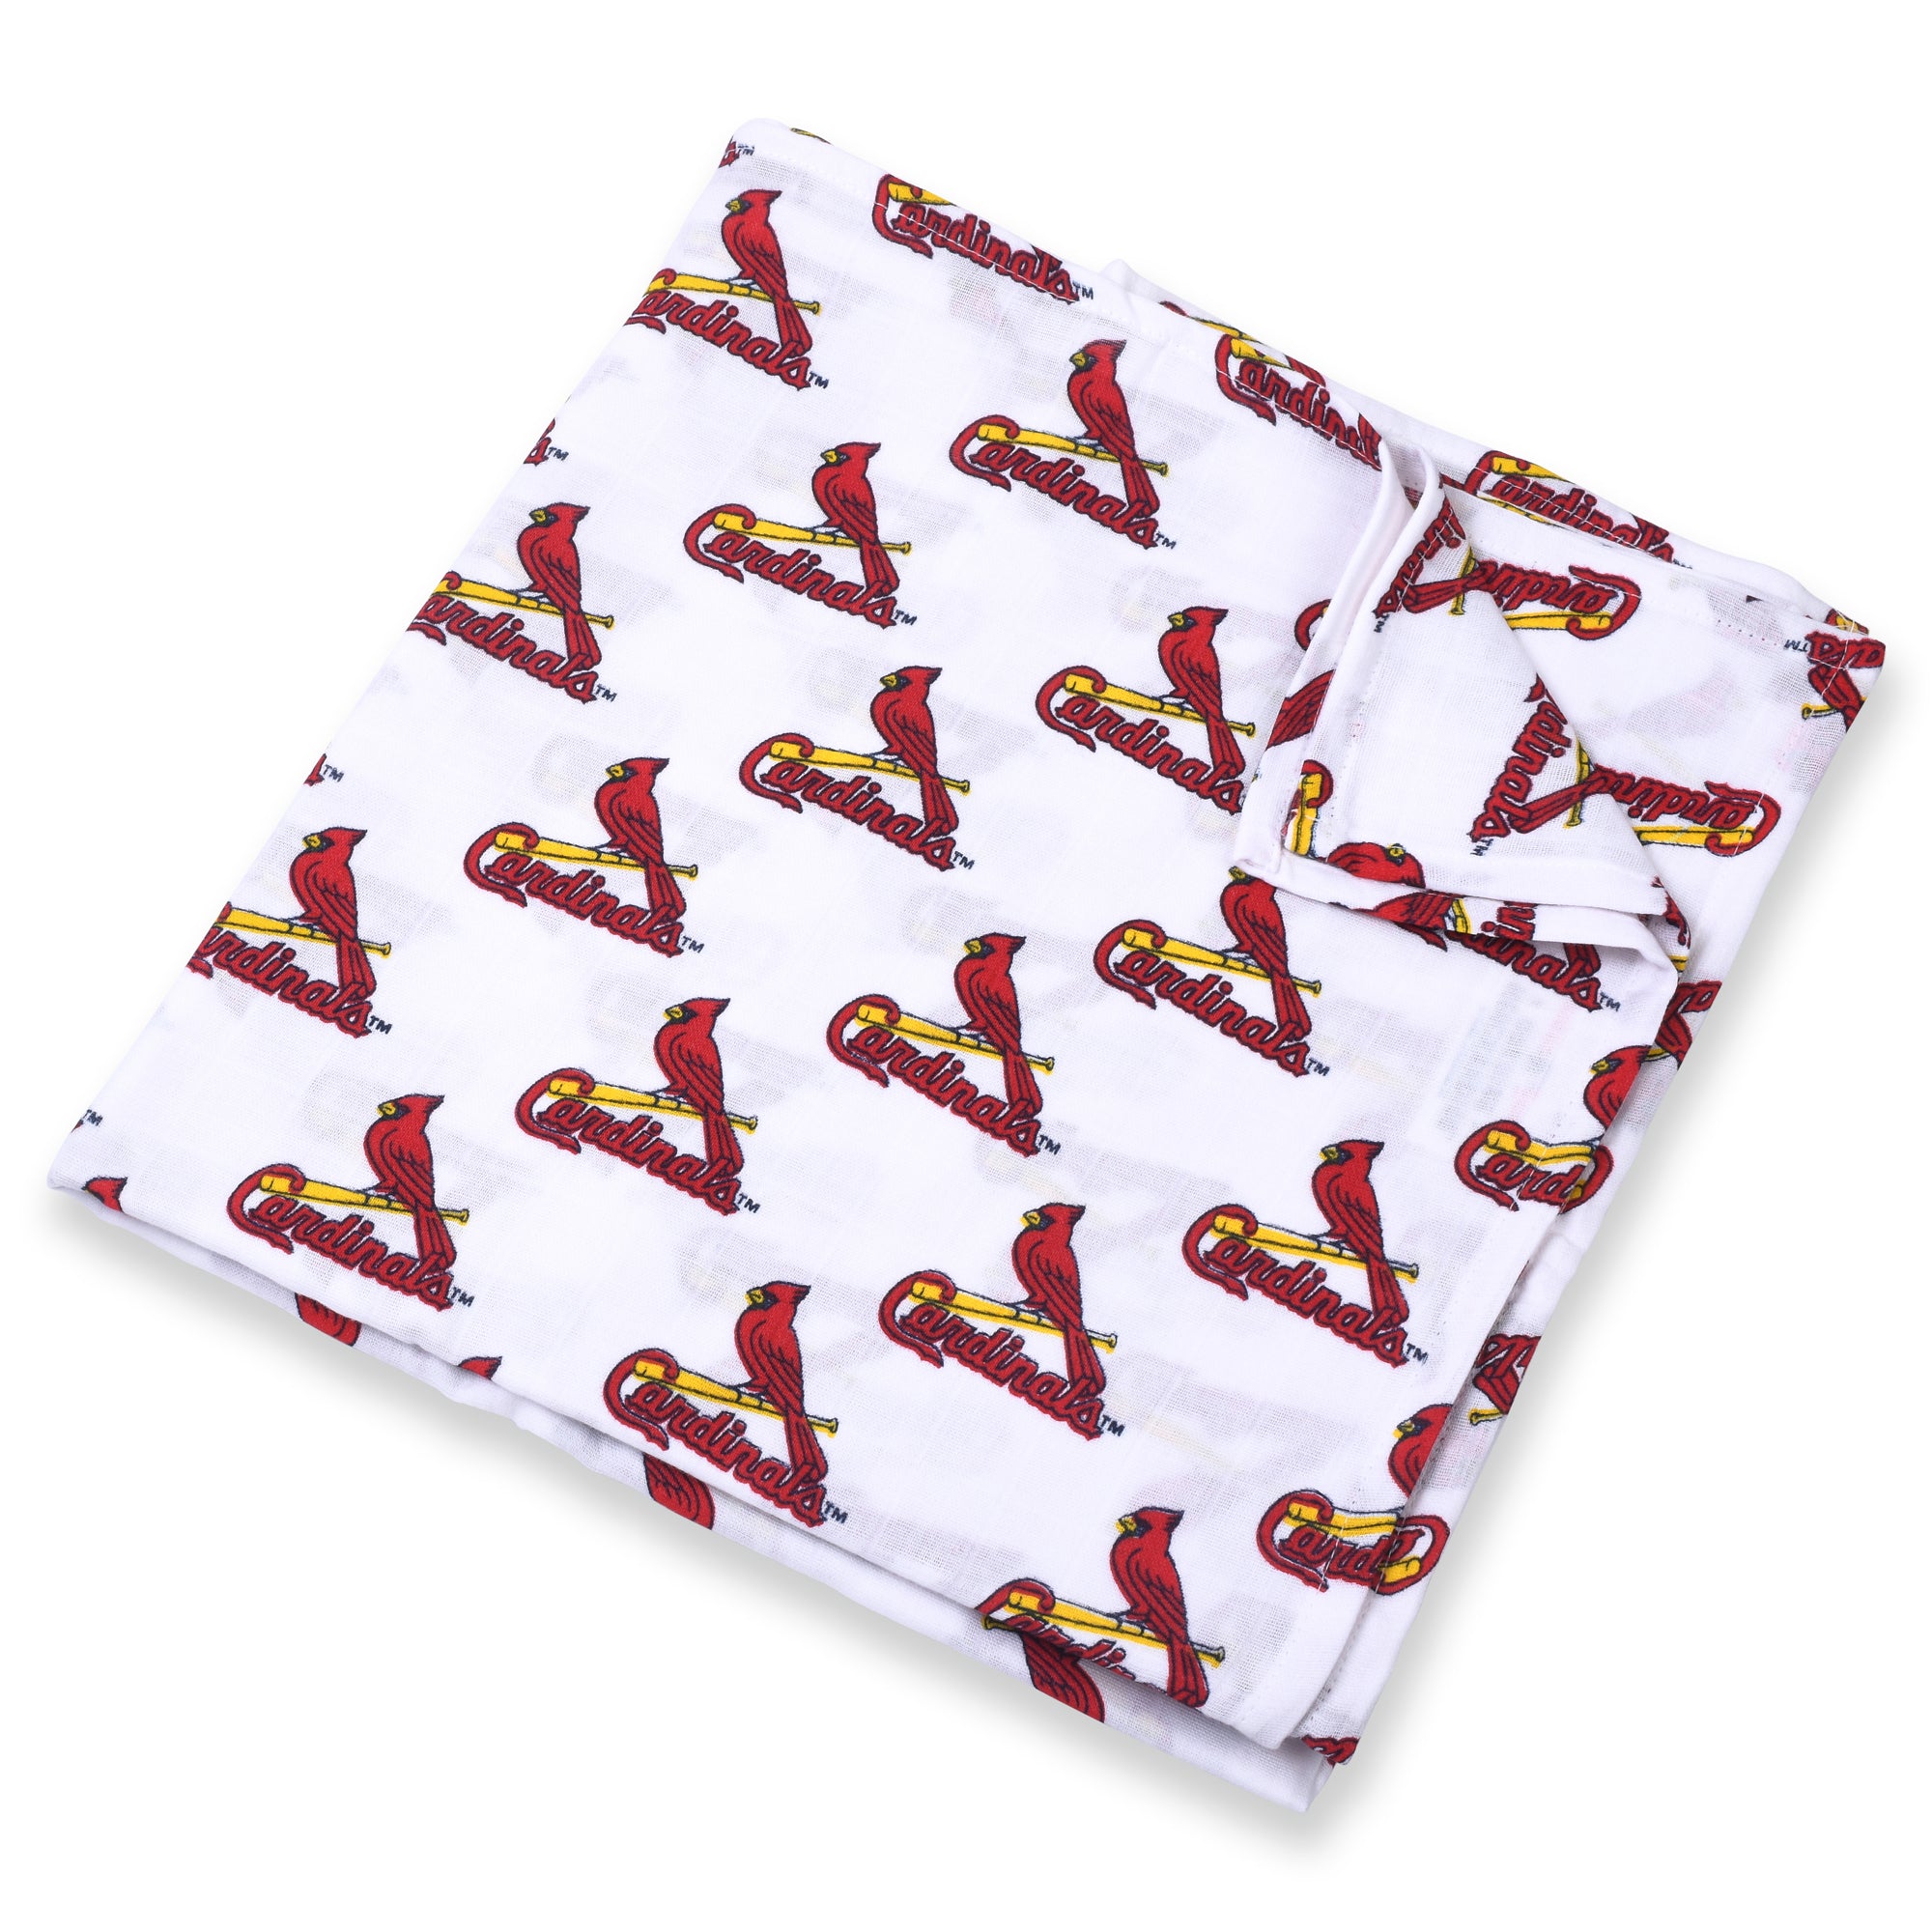 MLB St. Louis Cardinals Cotton Fabric